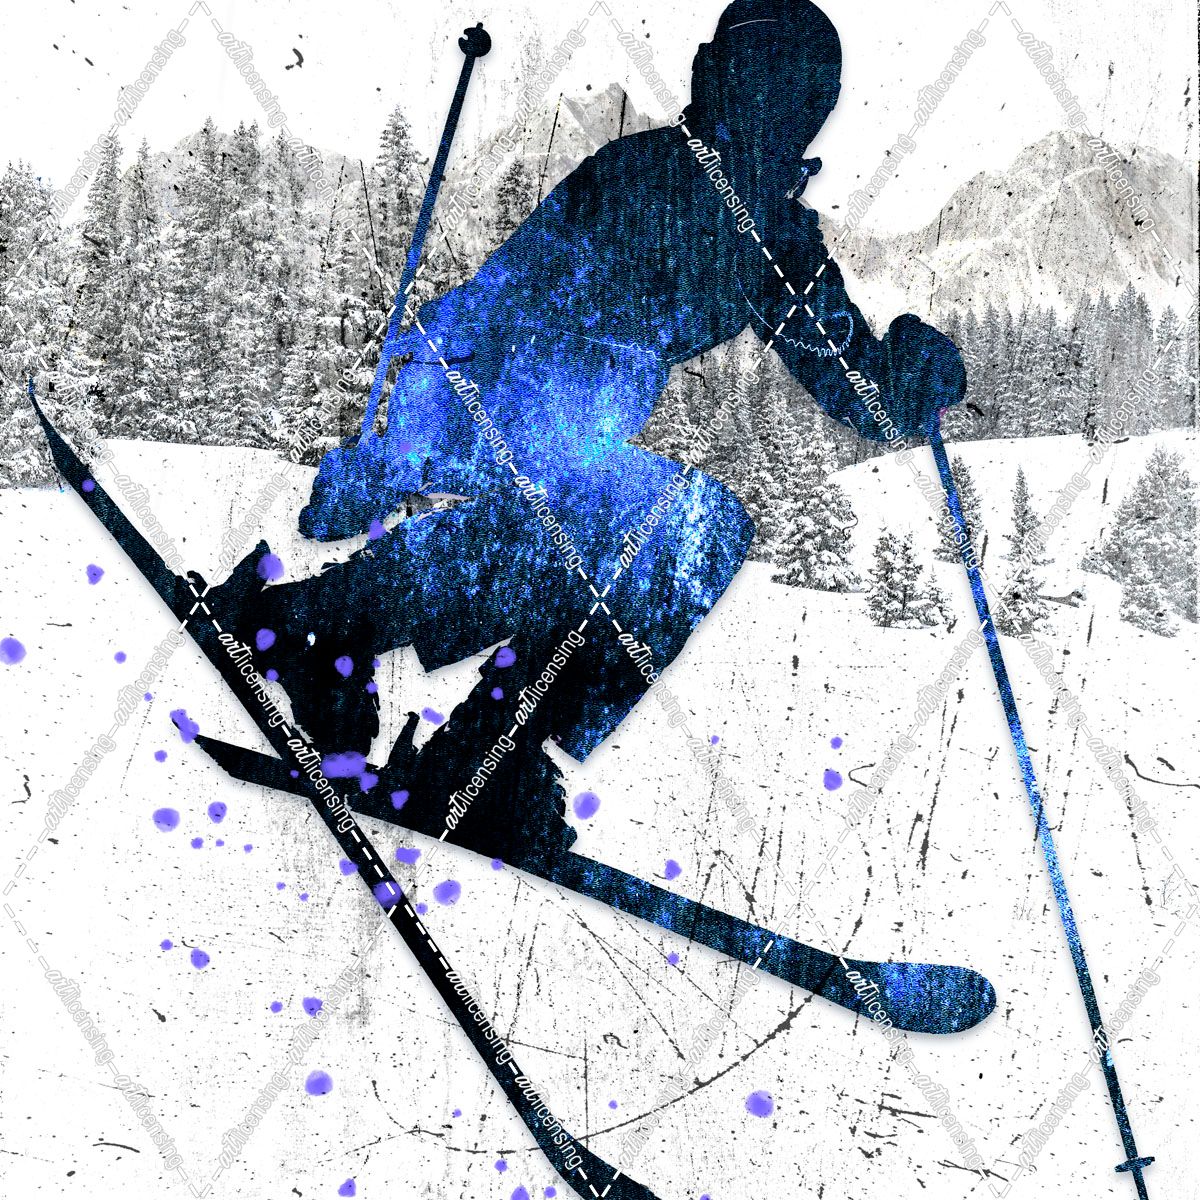 Extreme Skier 05